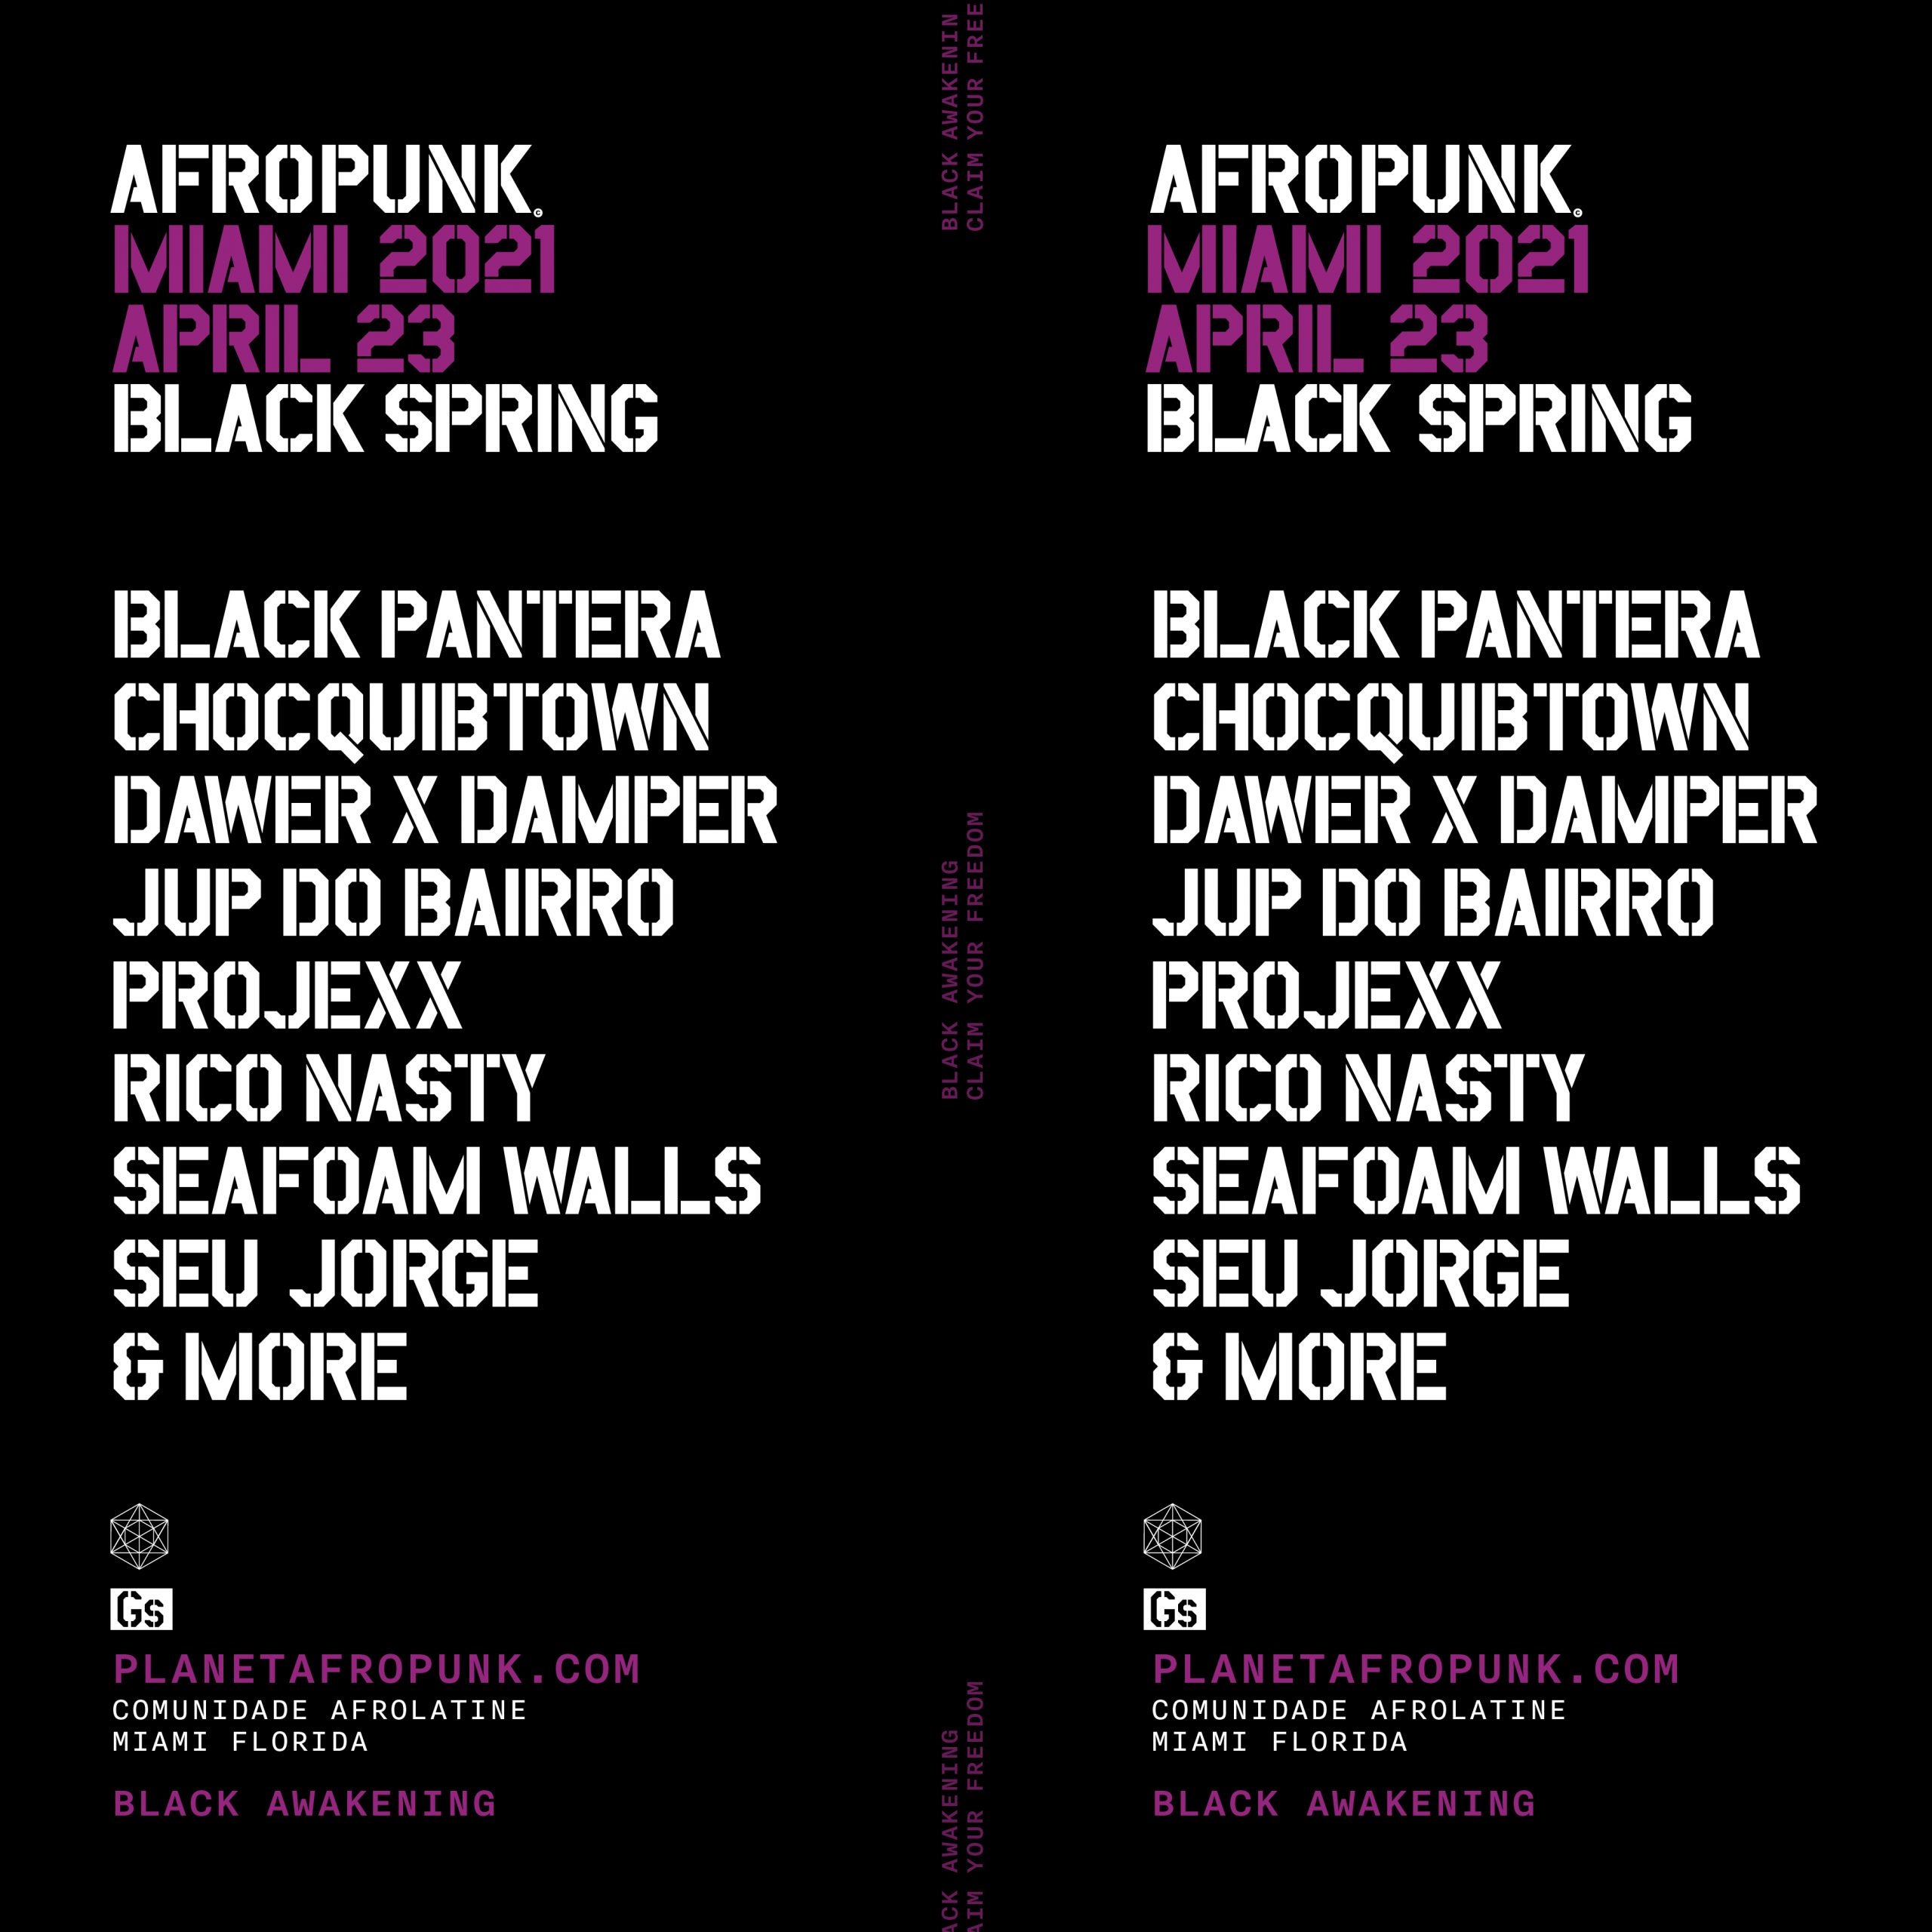 Rico Nasty, Seu Jorge And More To Headline AFROPUNK’s Black Spring Virtual Experience